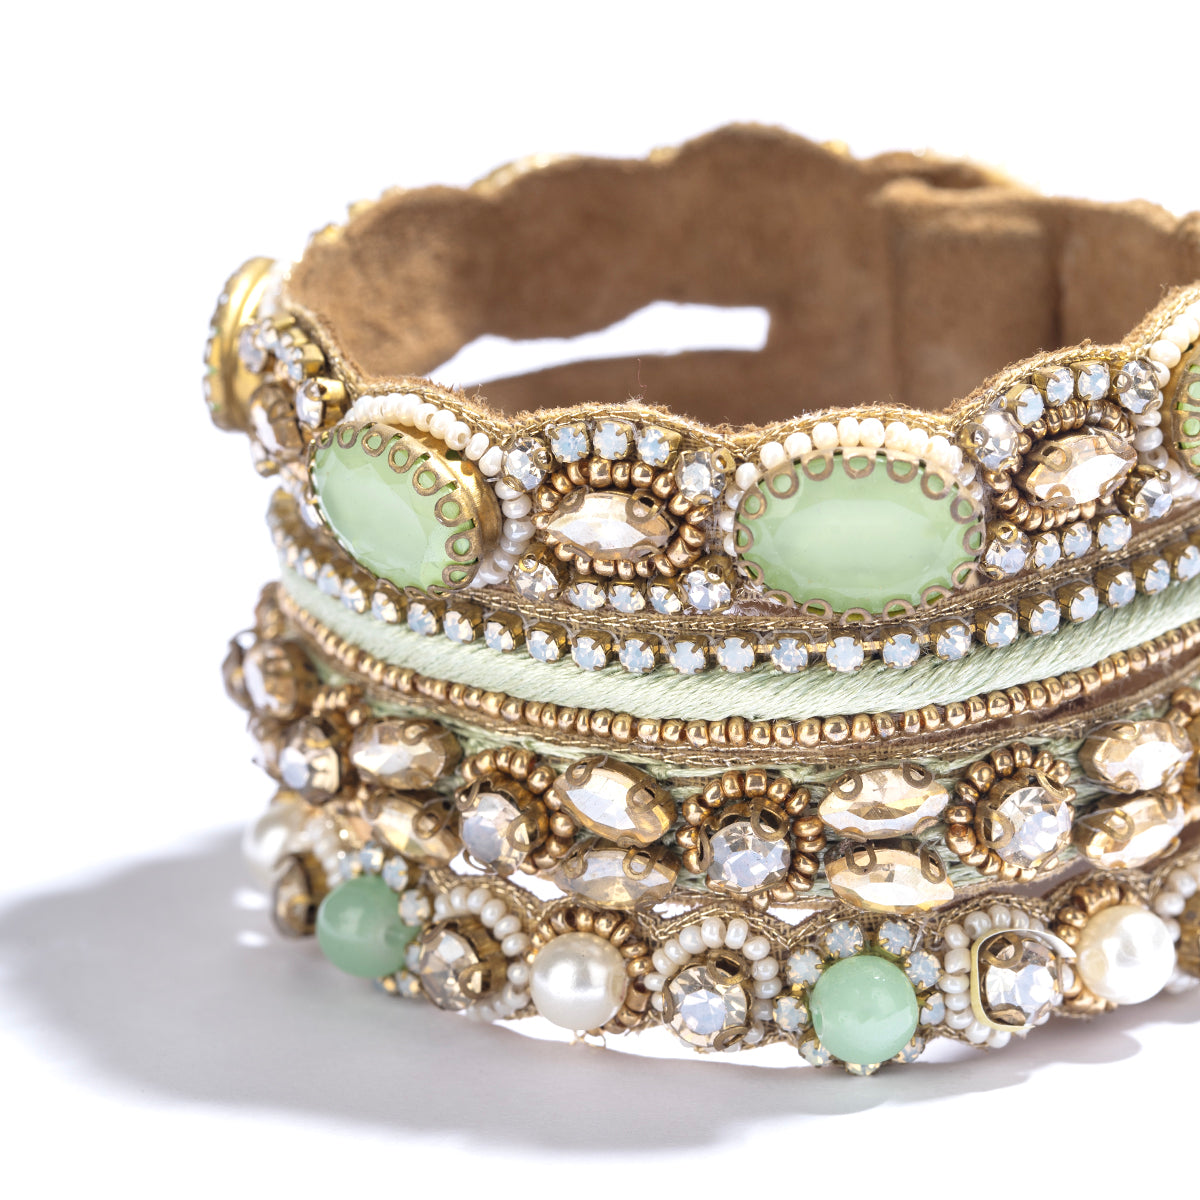 Deepa by Deepa Gurnani Handmade Brixie Bracelet in Jade color